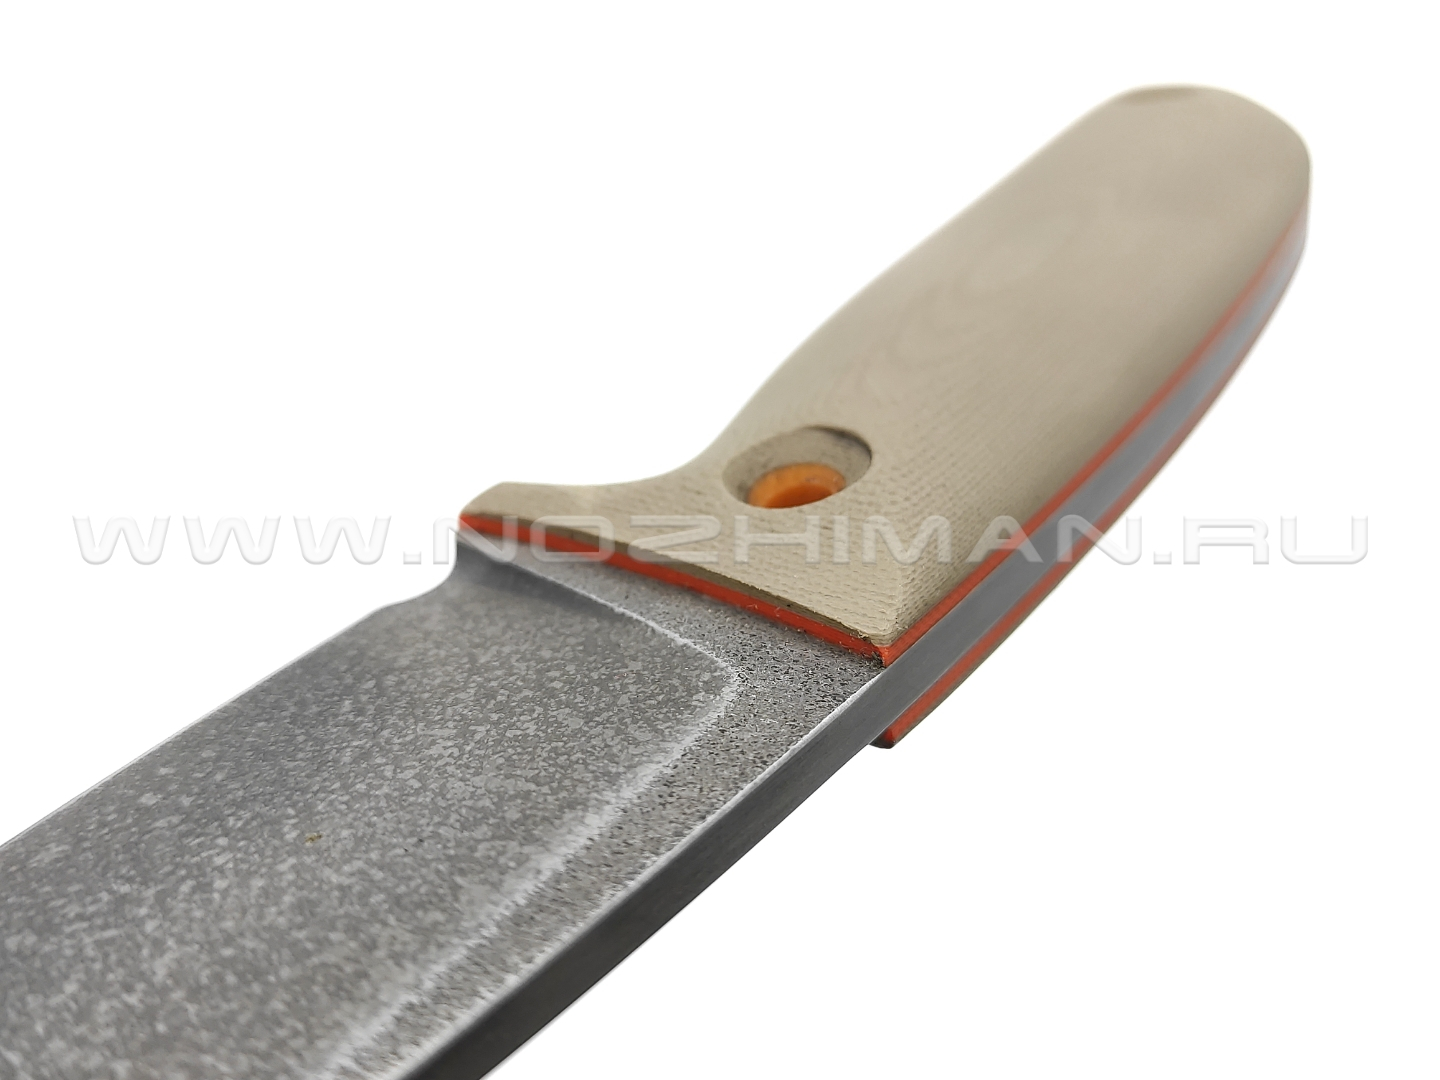 Dyag knives нож Model05_2 сталь N690, рукоять G10 tan